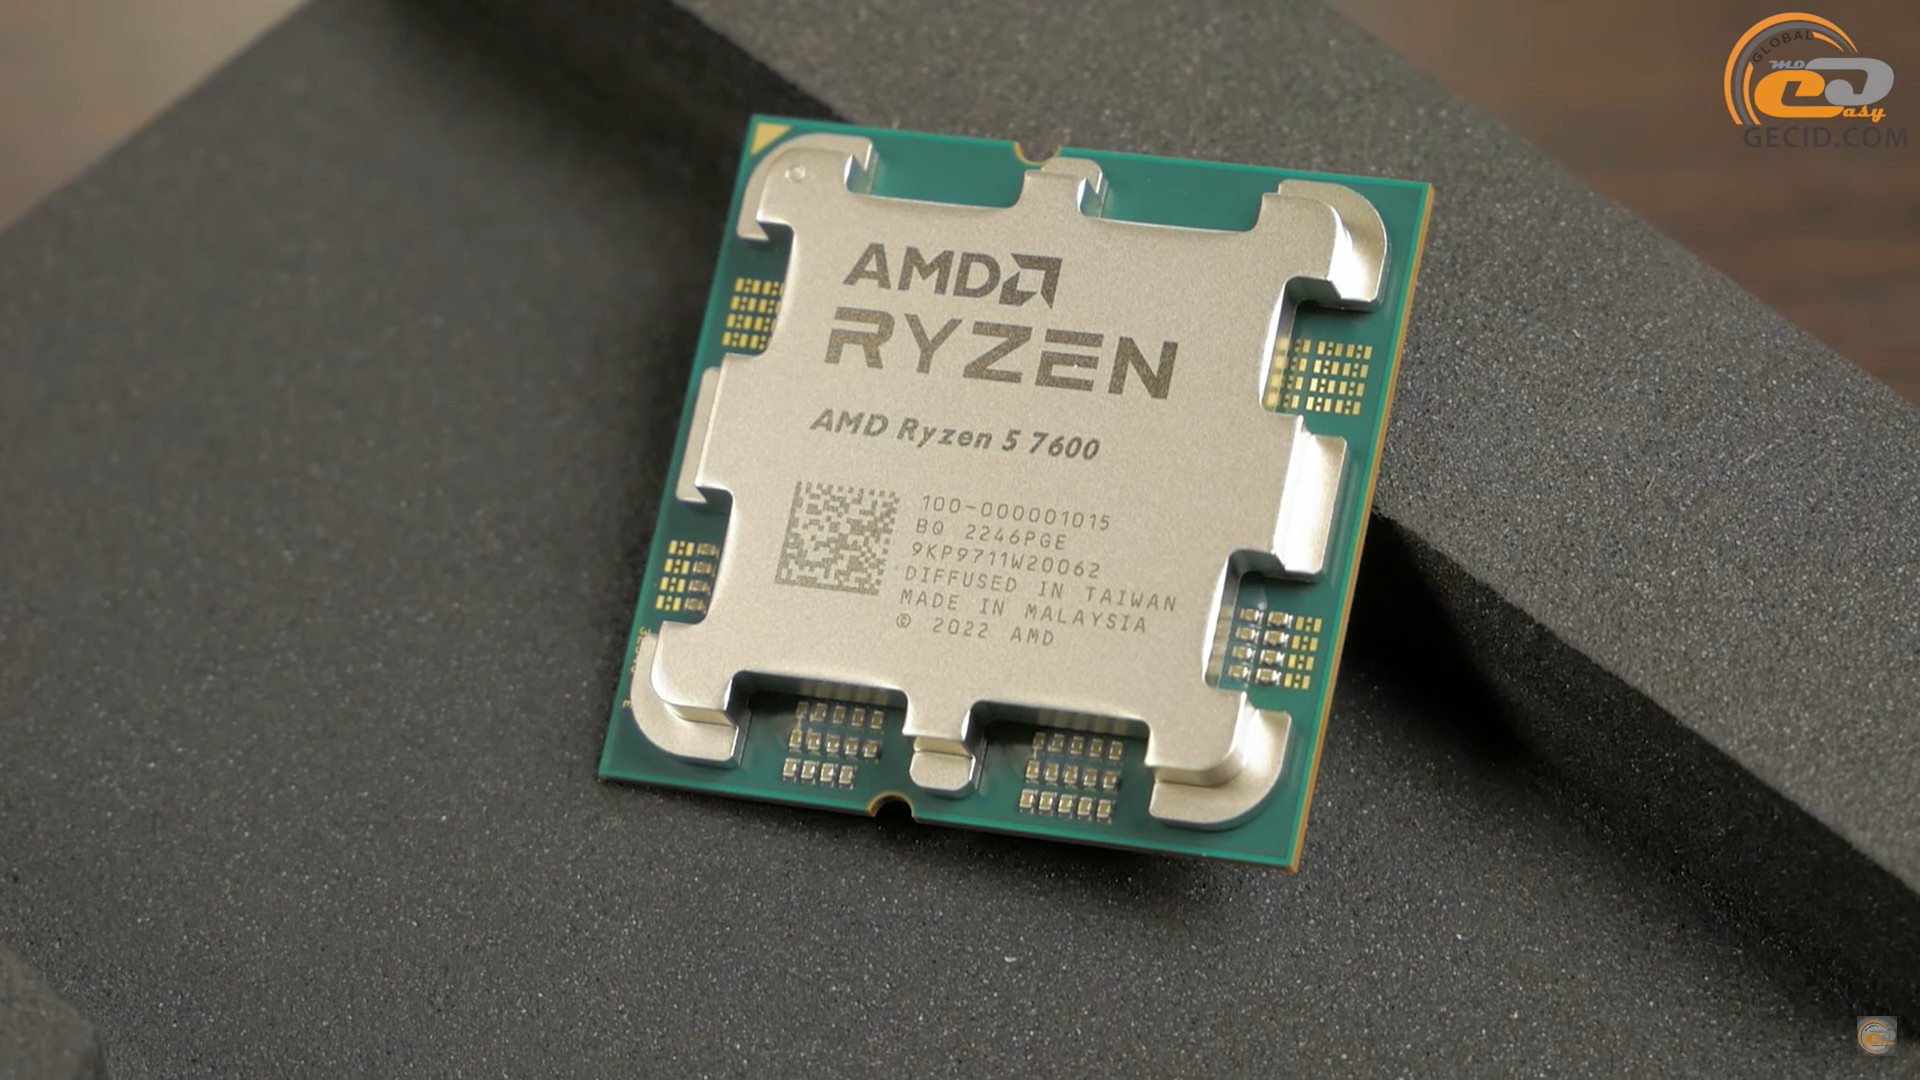 Amd ryzen 5 7600x am5. Процессор - AMD Ryzen 5 7600x am5. I5 7600.